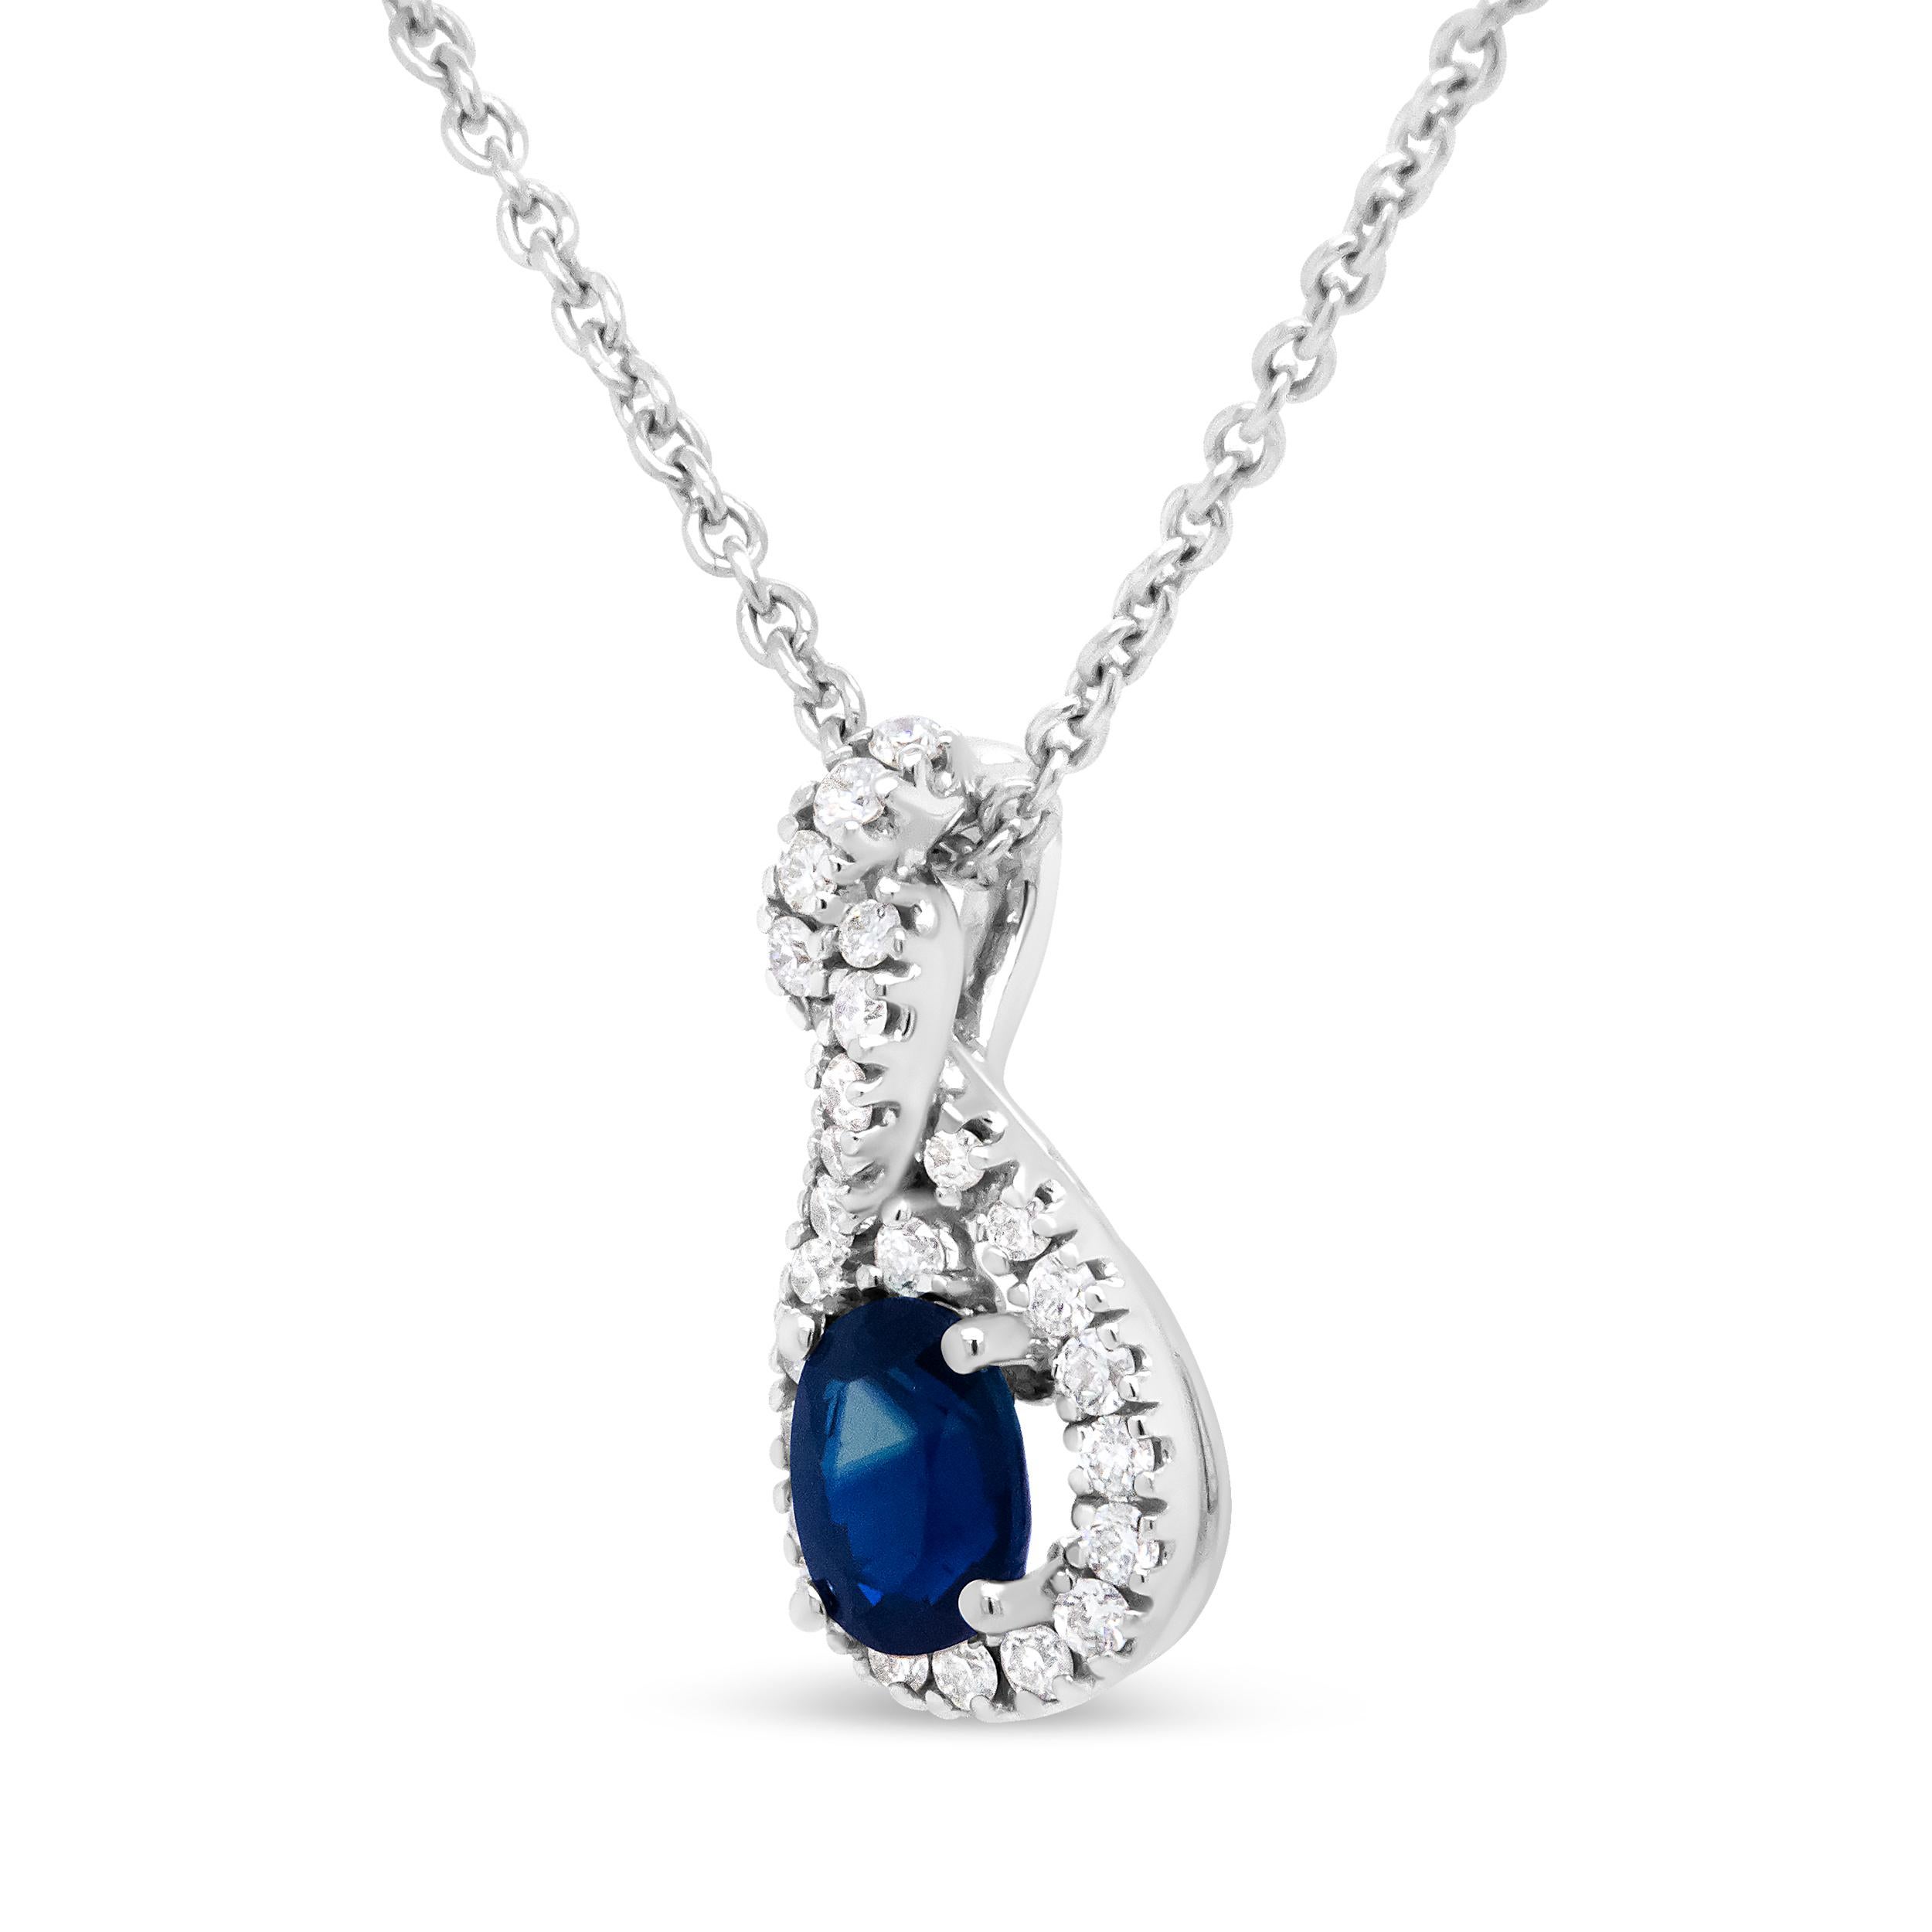 Contemporary 18K White Gold 1/7 Carat Diamond & Oval Blue Sapphire Pendant Necklace